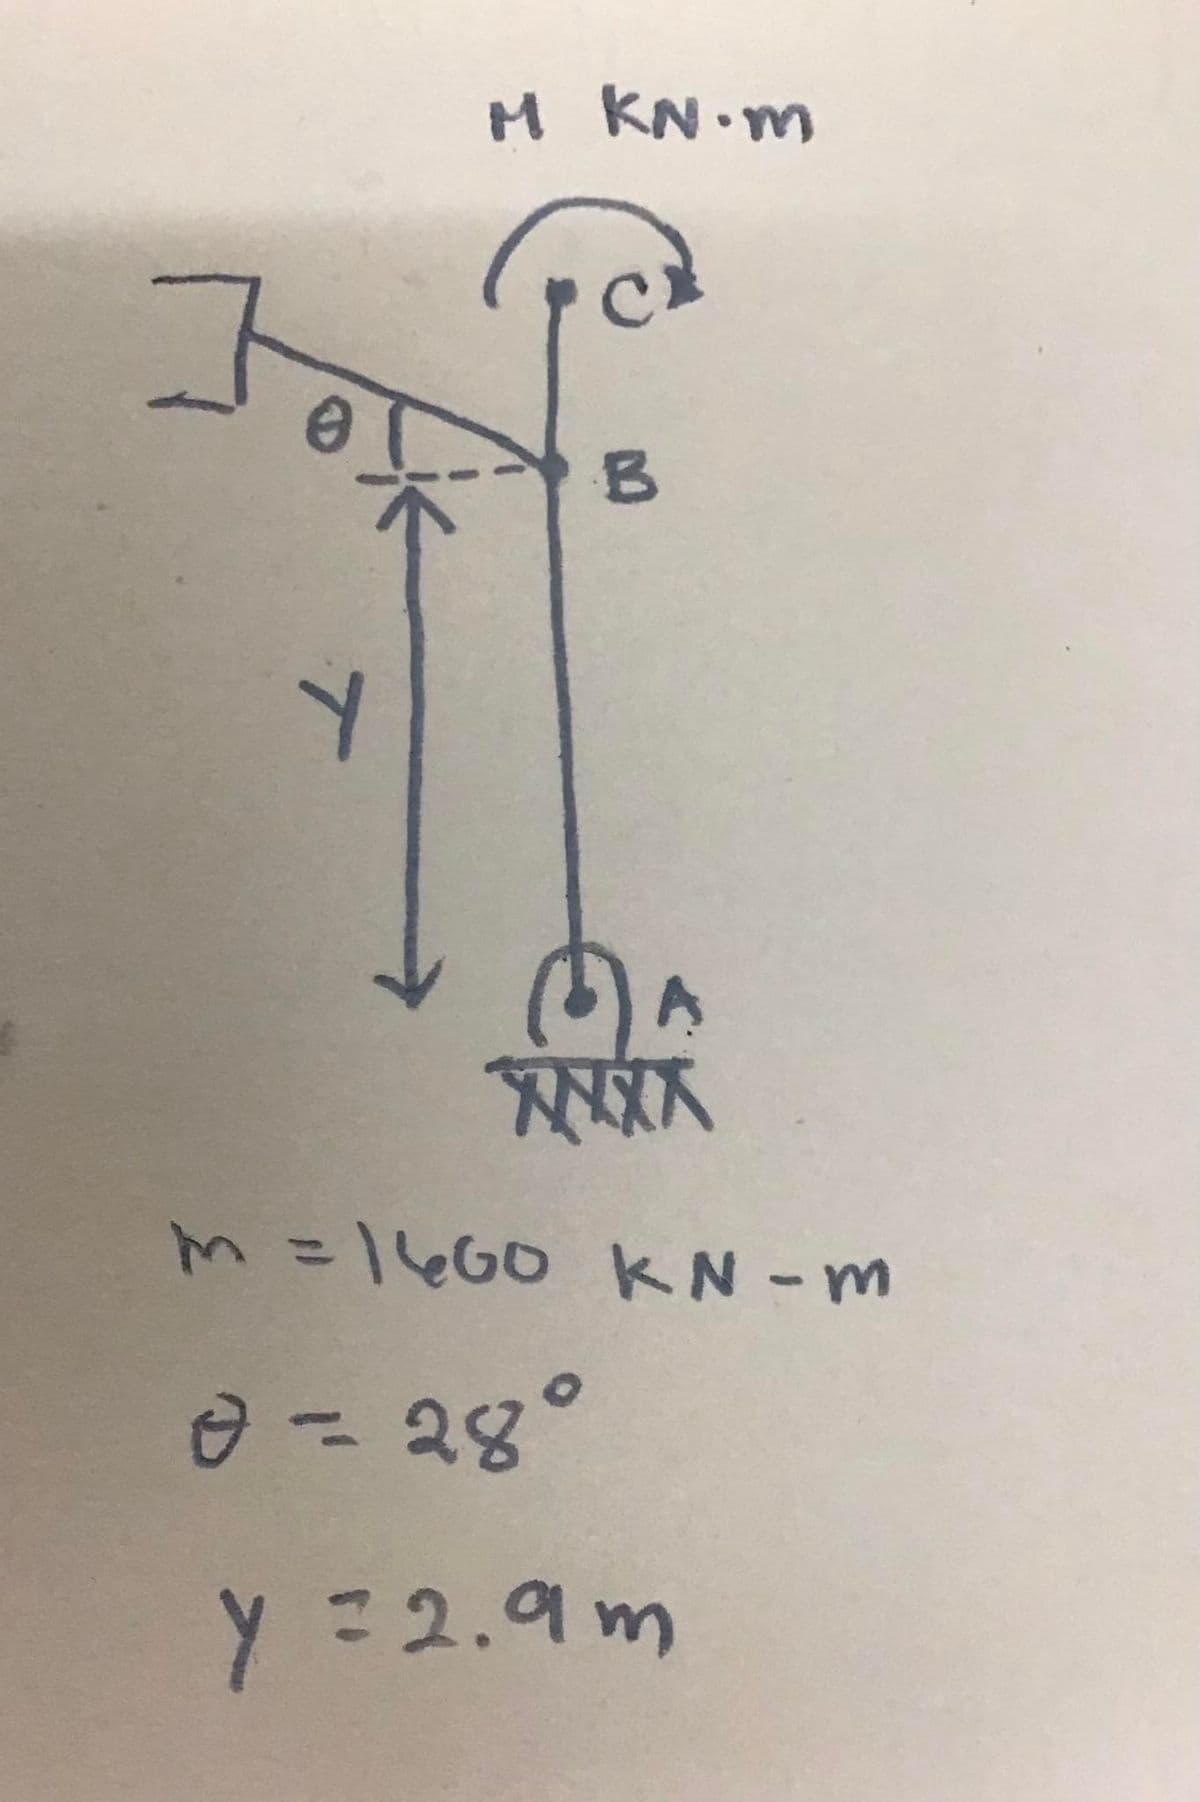 M KN.m
M=14G0 KN-m
%3D
o = 28°
y= 2.9m
